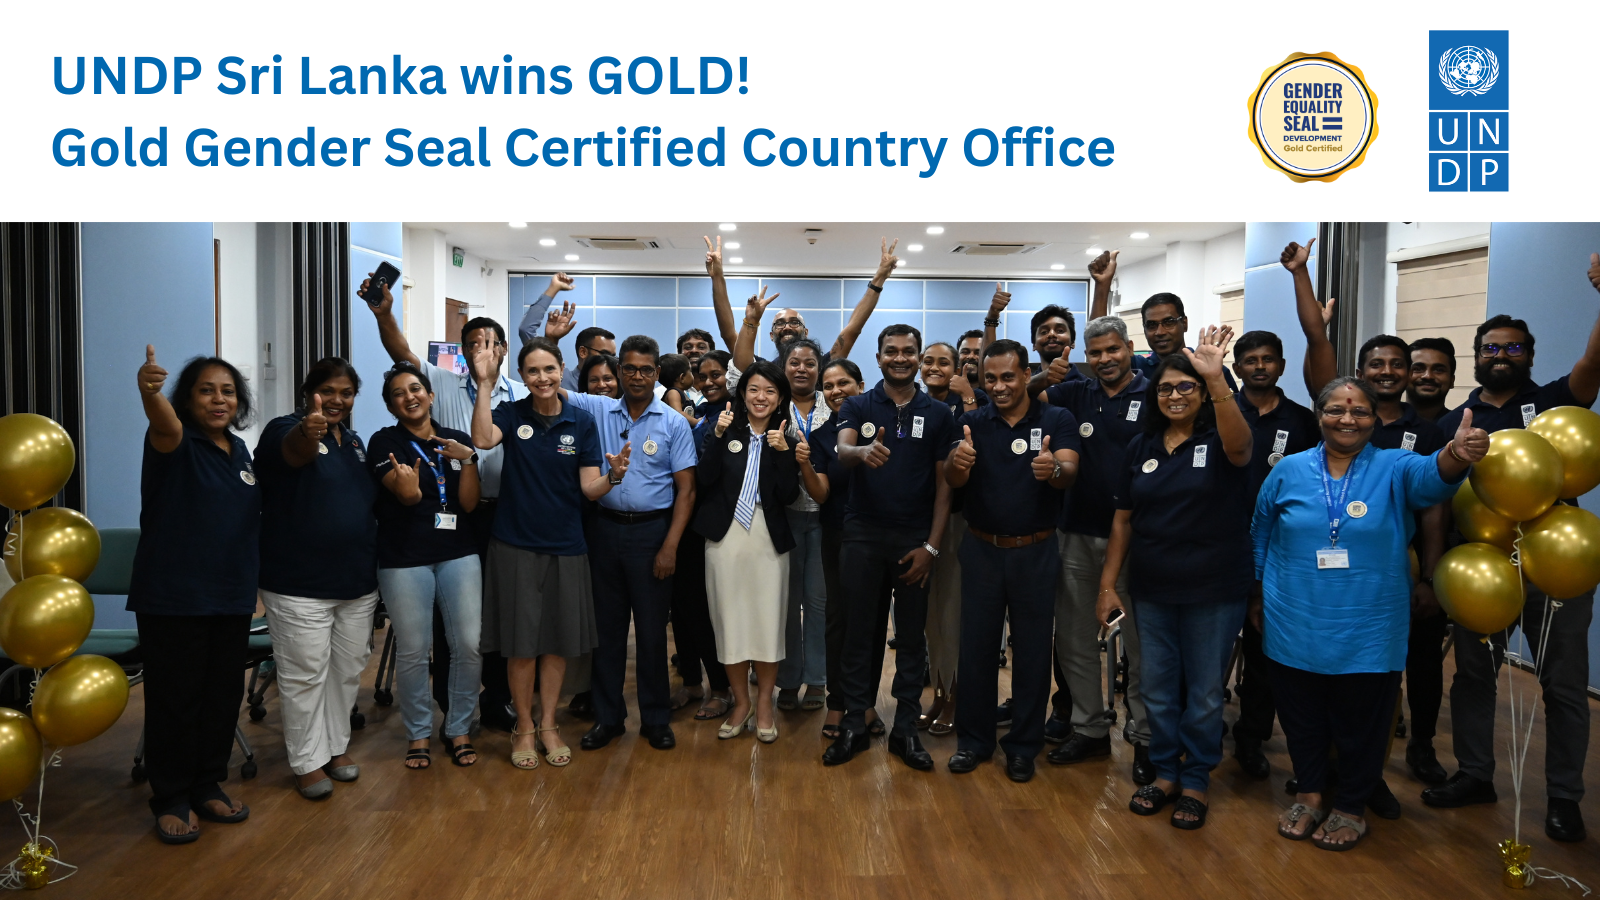 UNDP Sri Lanka wins Gold